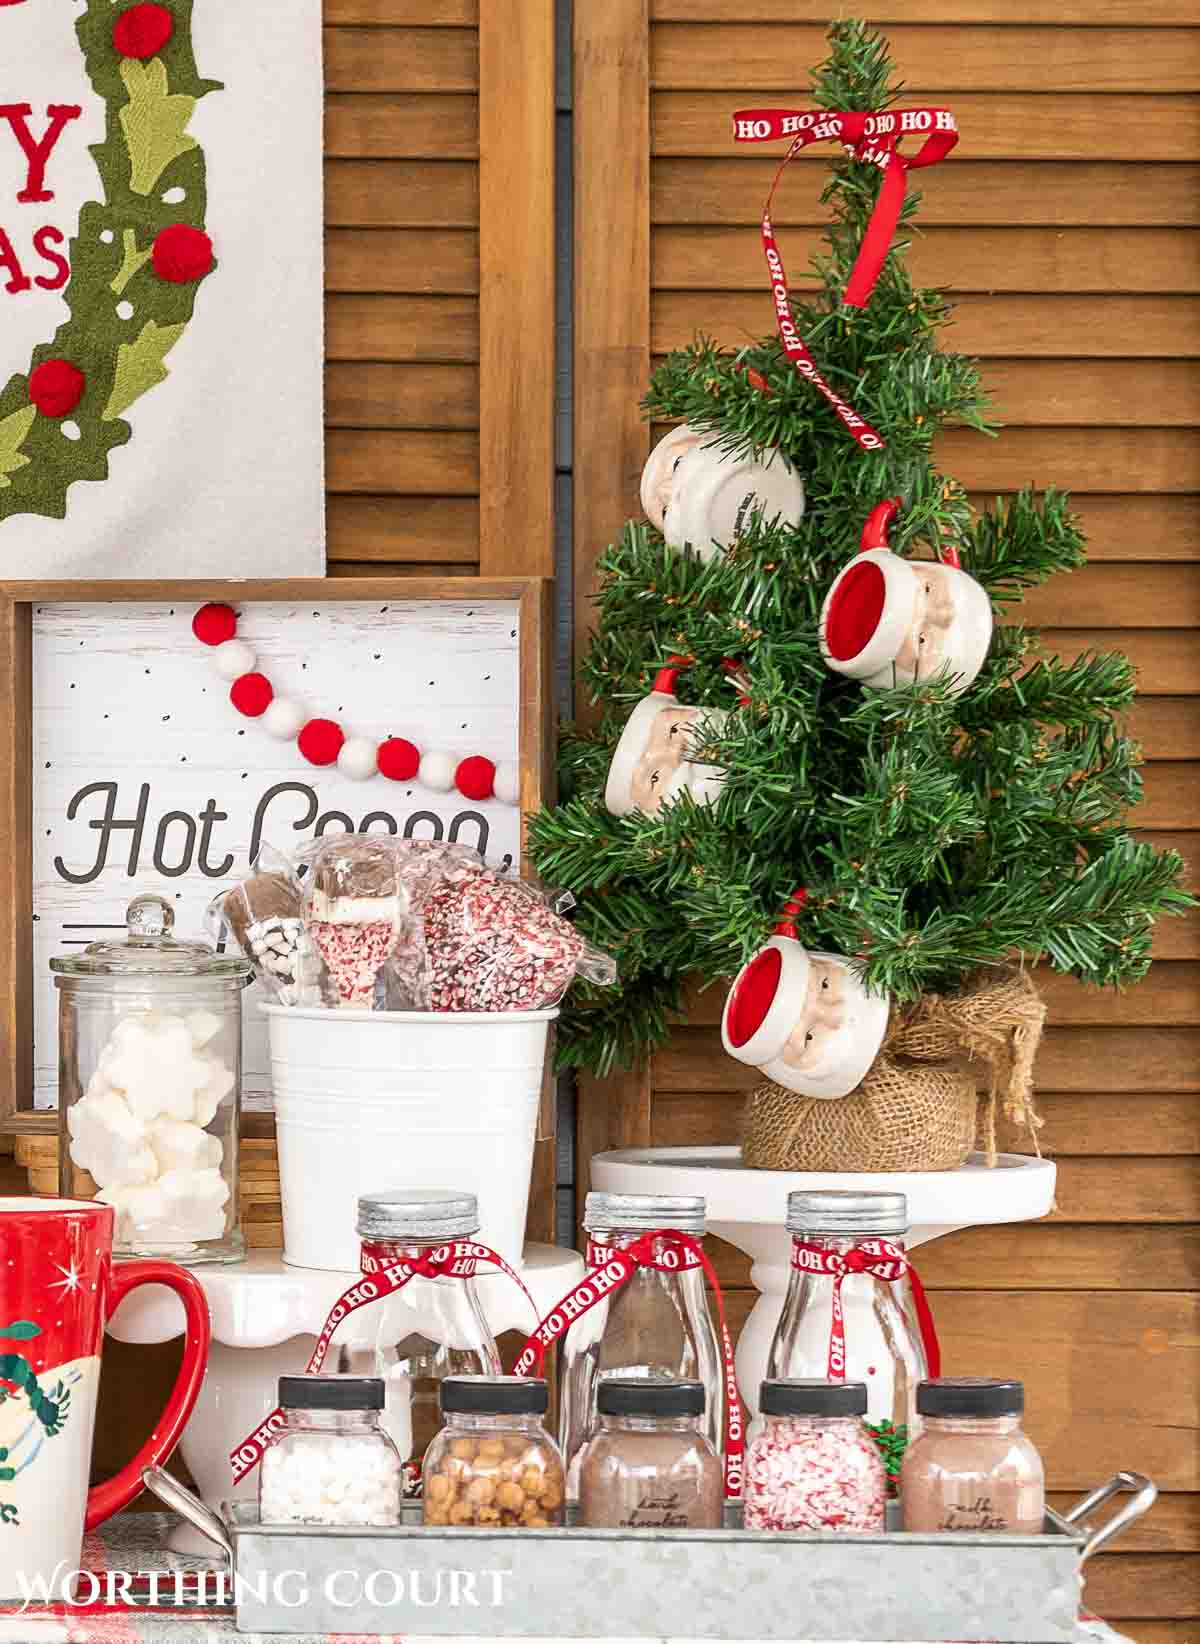 mini Christmas tree and Santa mugs on a hot chocolate bar